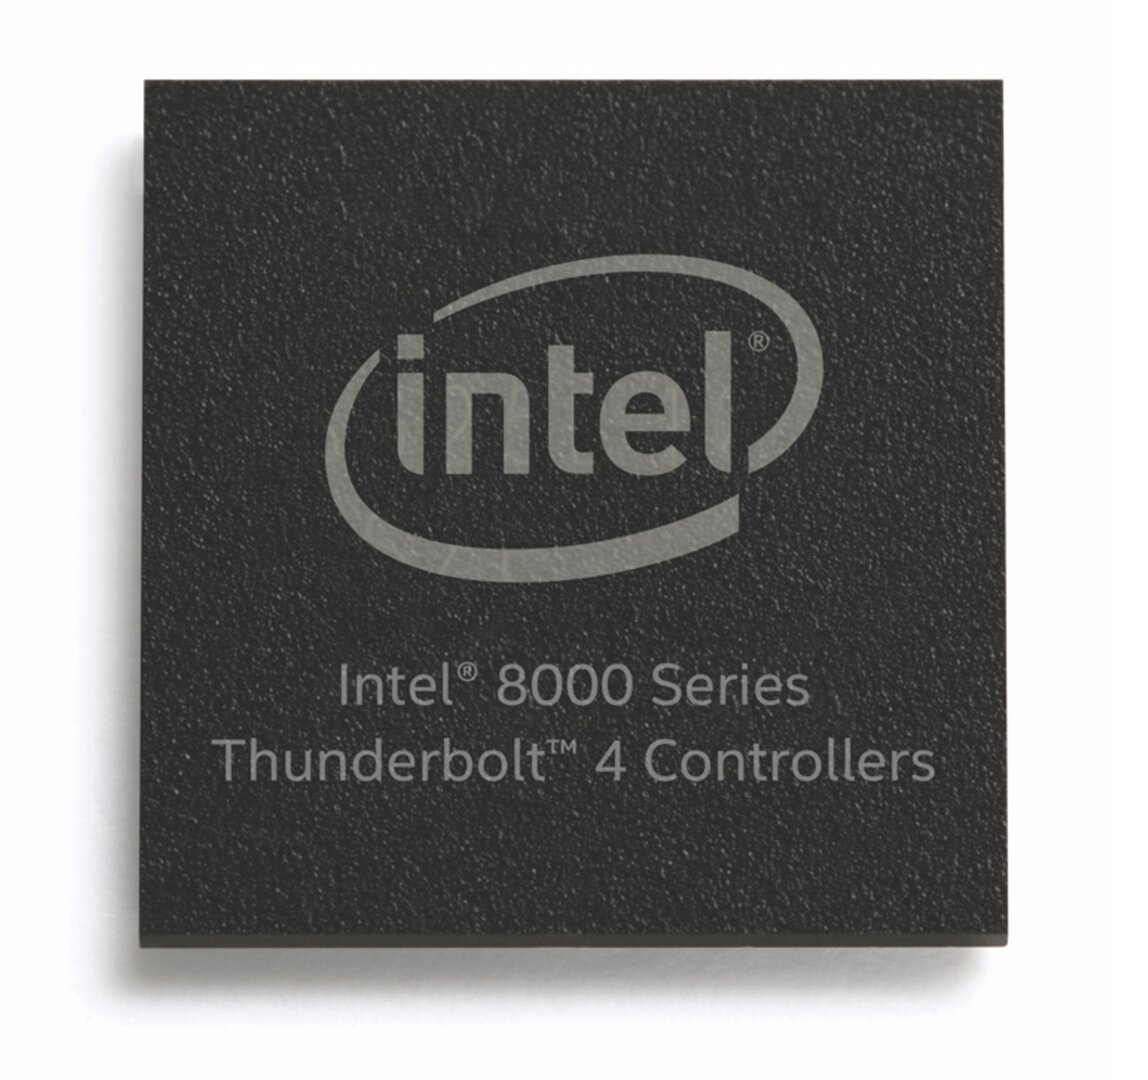 Intel 8000 Series Thunderbolt 4 Controller